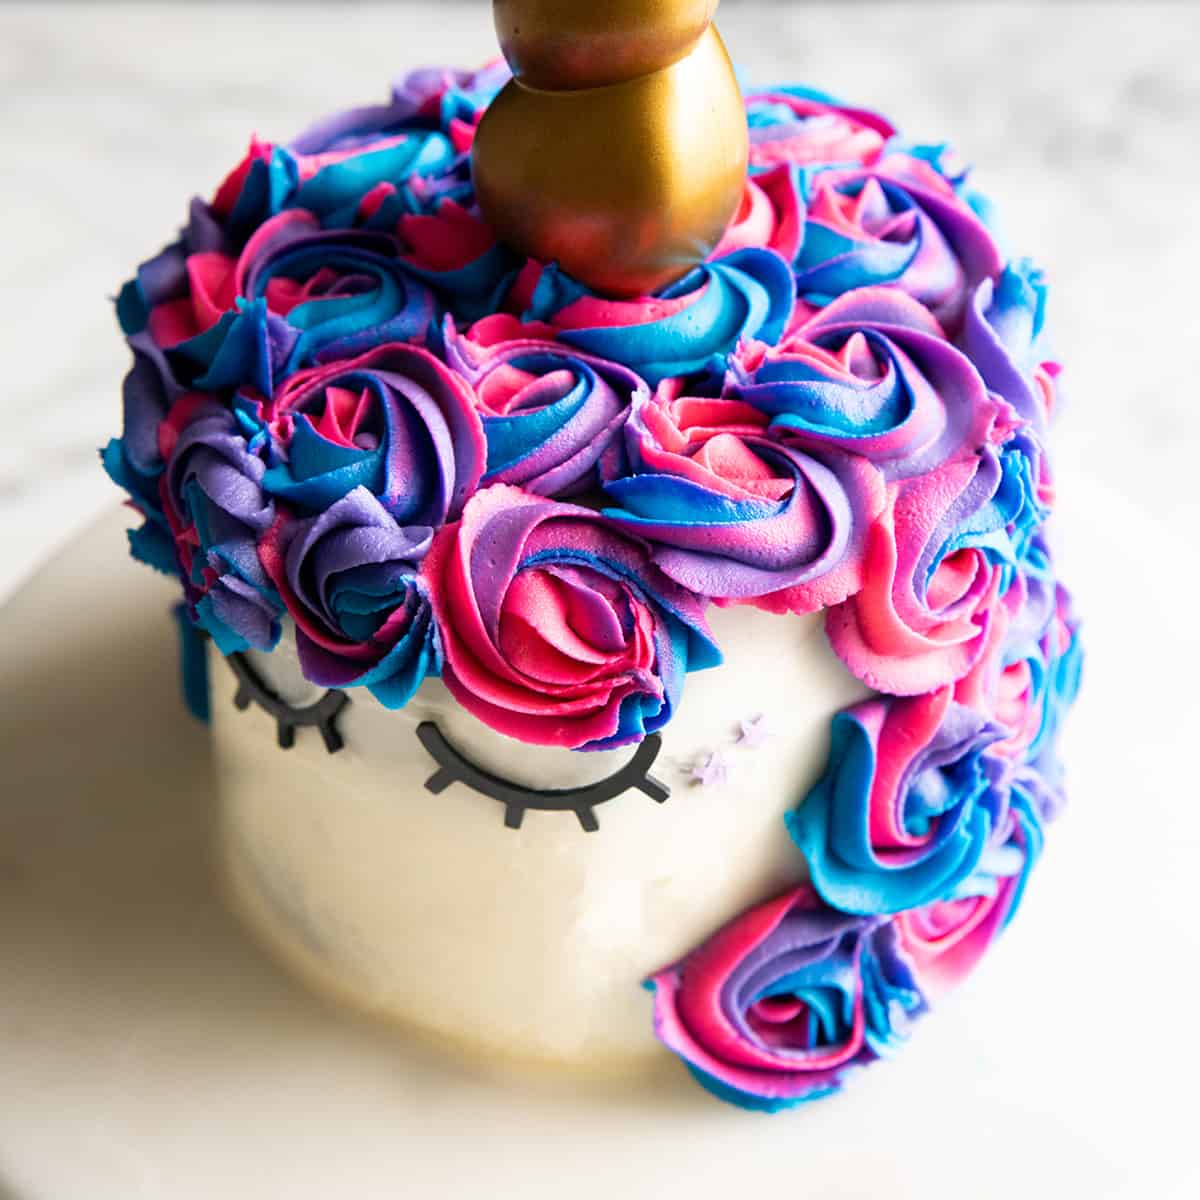 unicorn cake decorated with homemade vanilla frosting